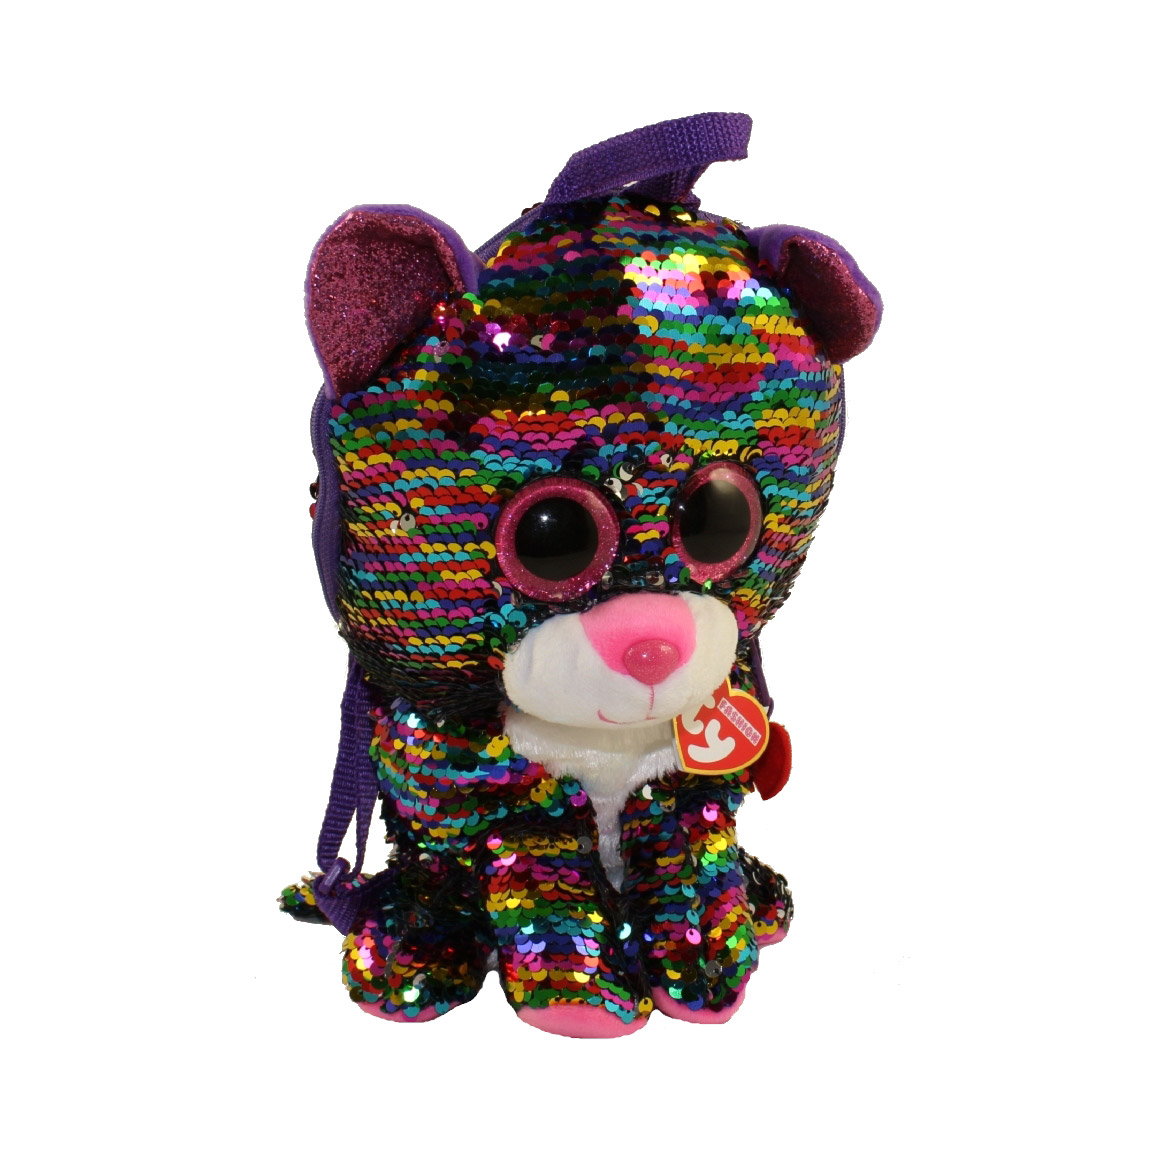 Рюкзак TY игрушка Дотти леопард многоцветный с пайетками - фото 1